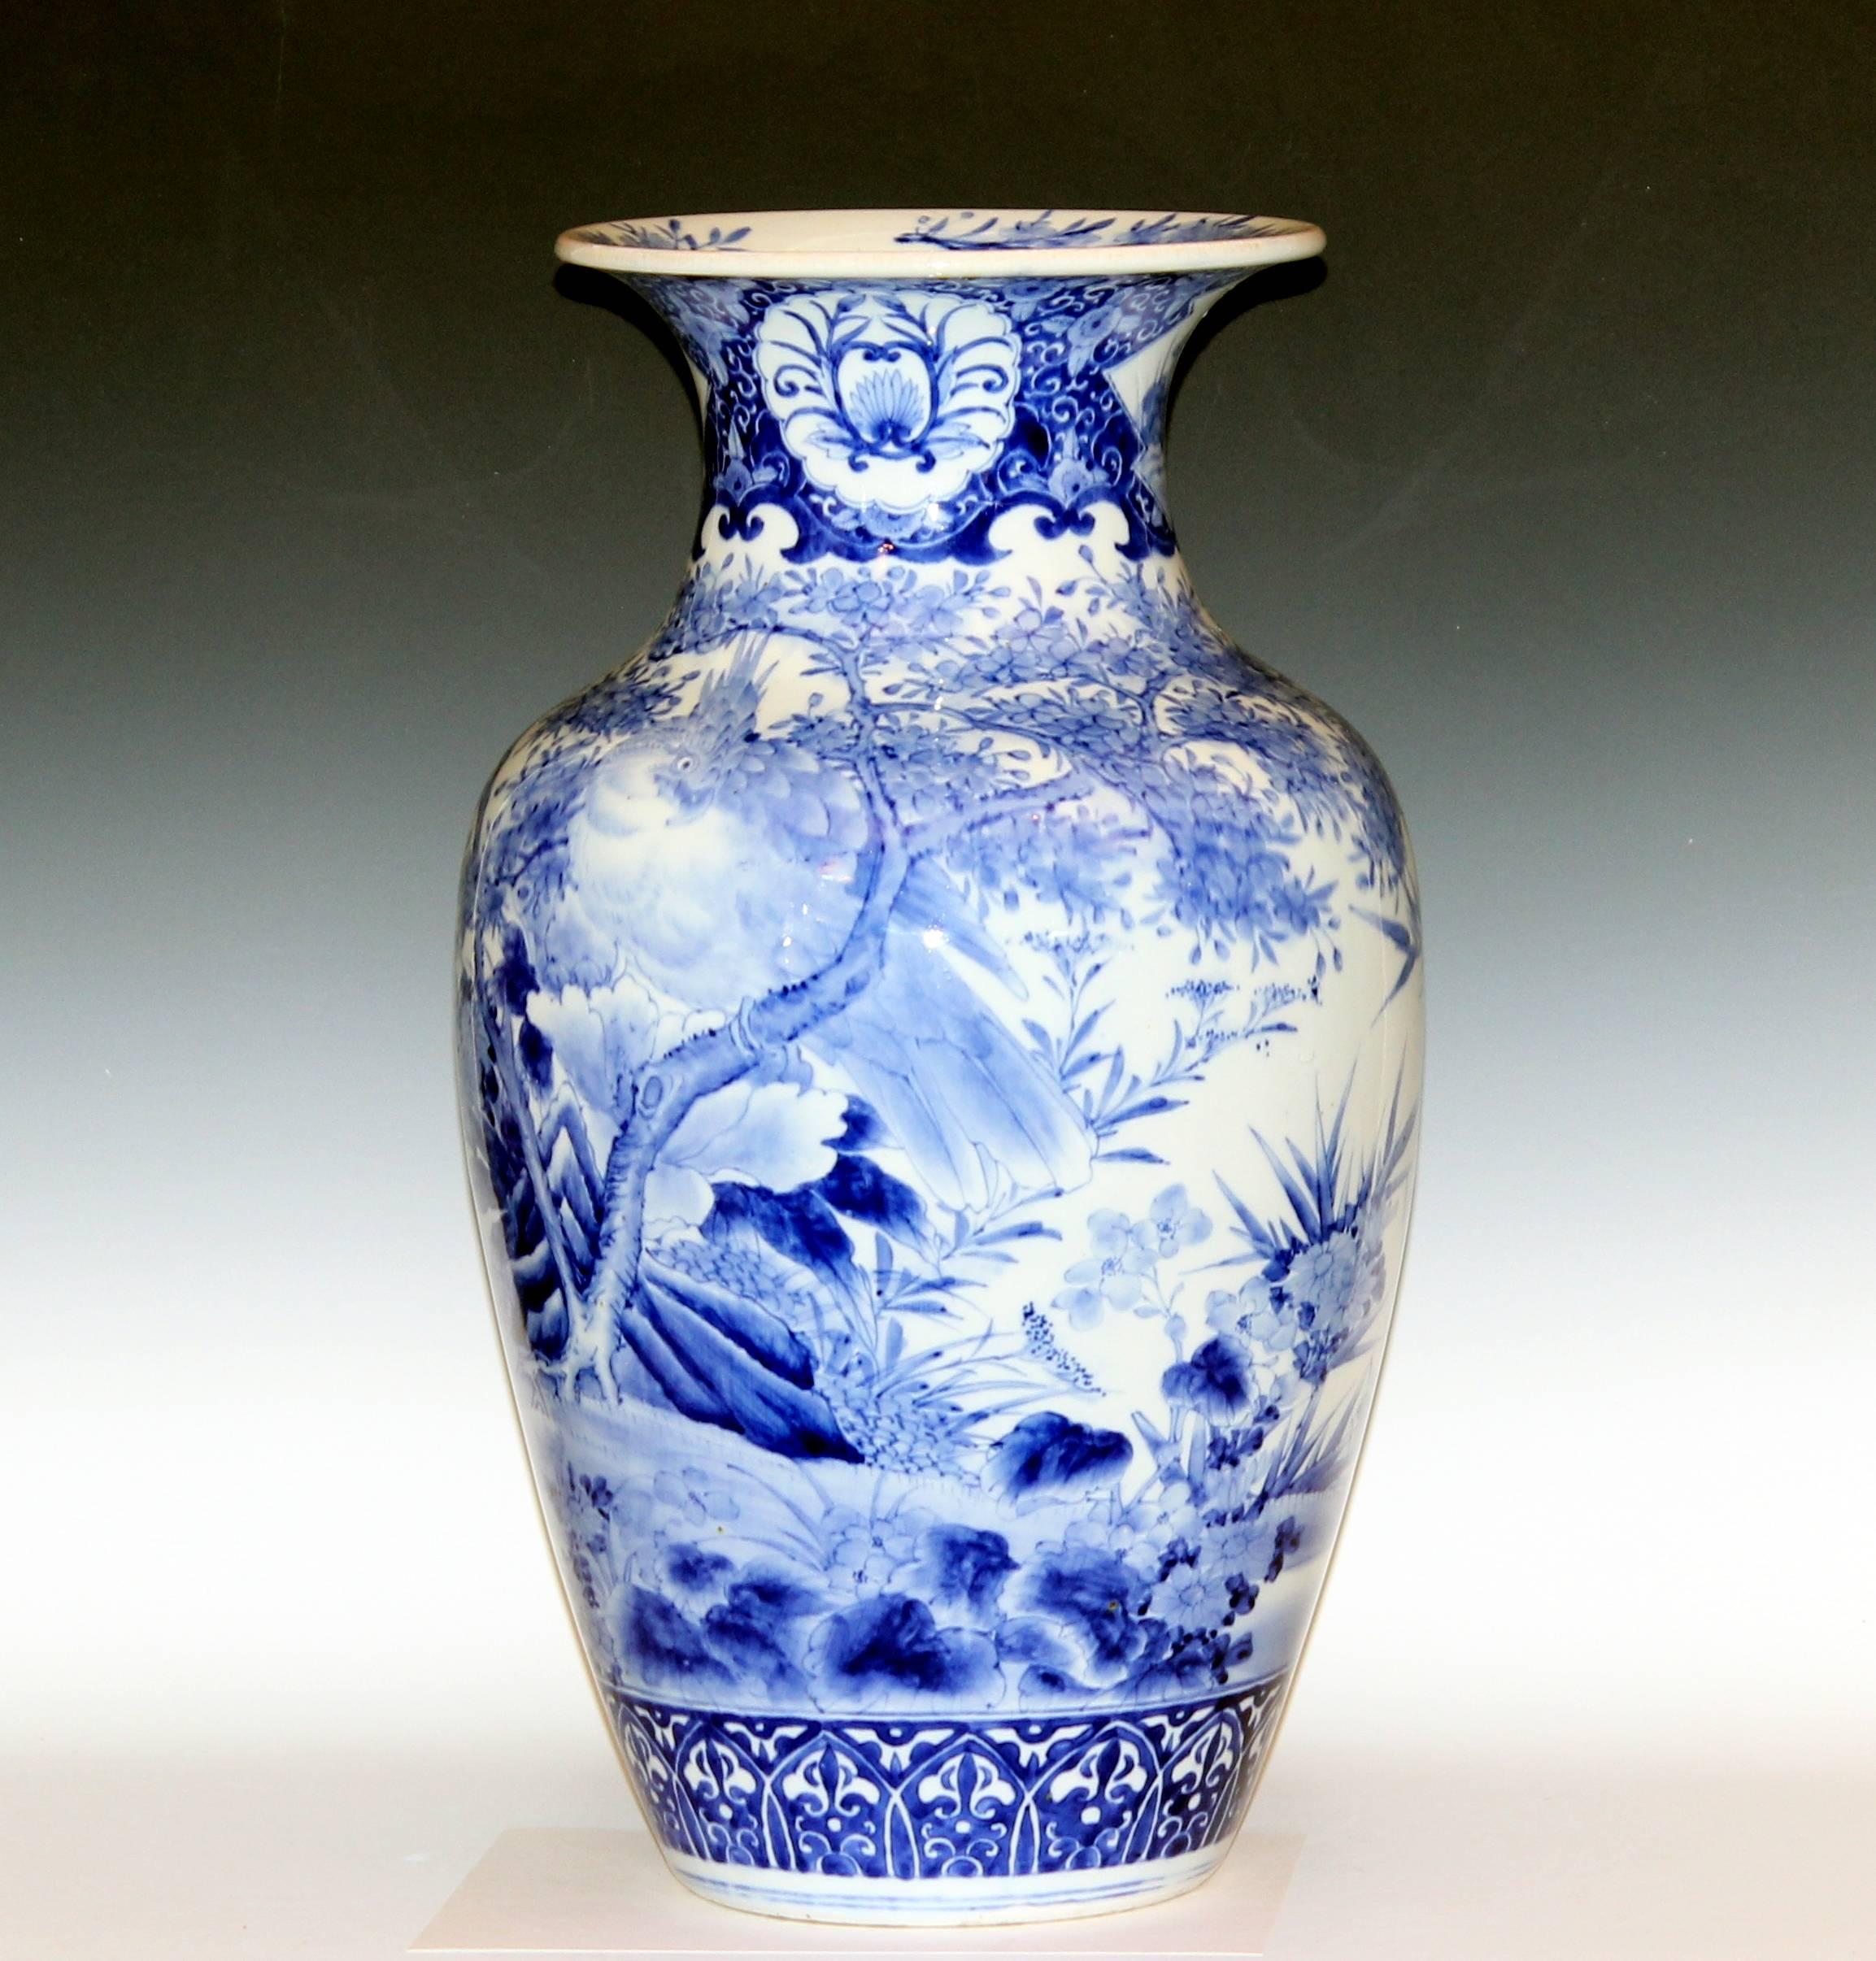 Antique Arita porcelain vase with birds amongst dense foliage and good underglaze cobalt blue color. Late 19th century. 22